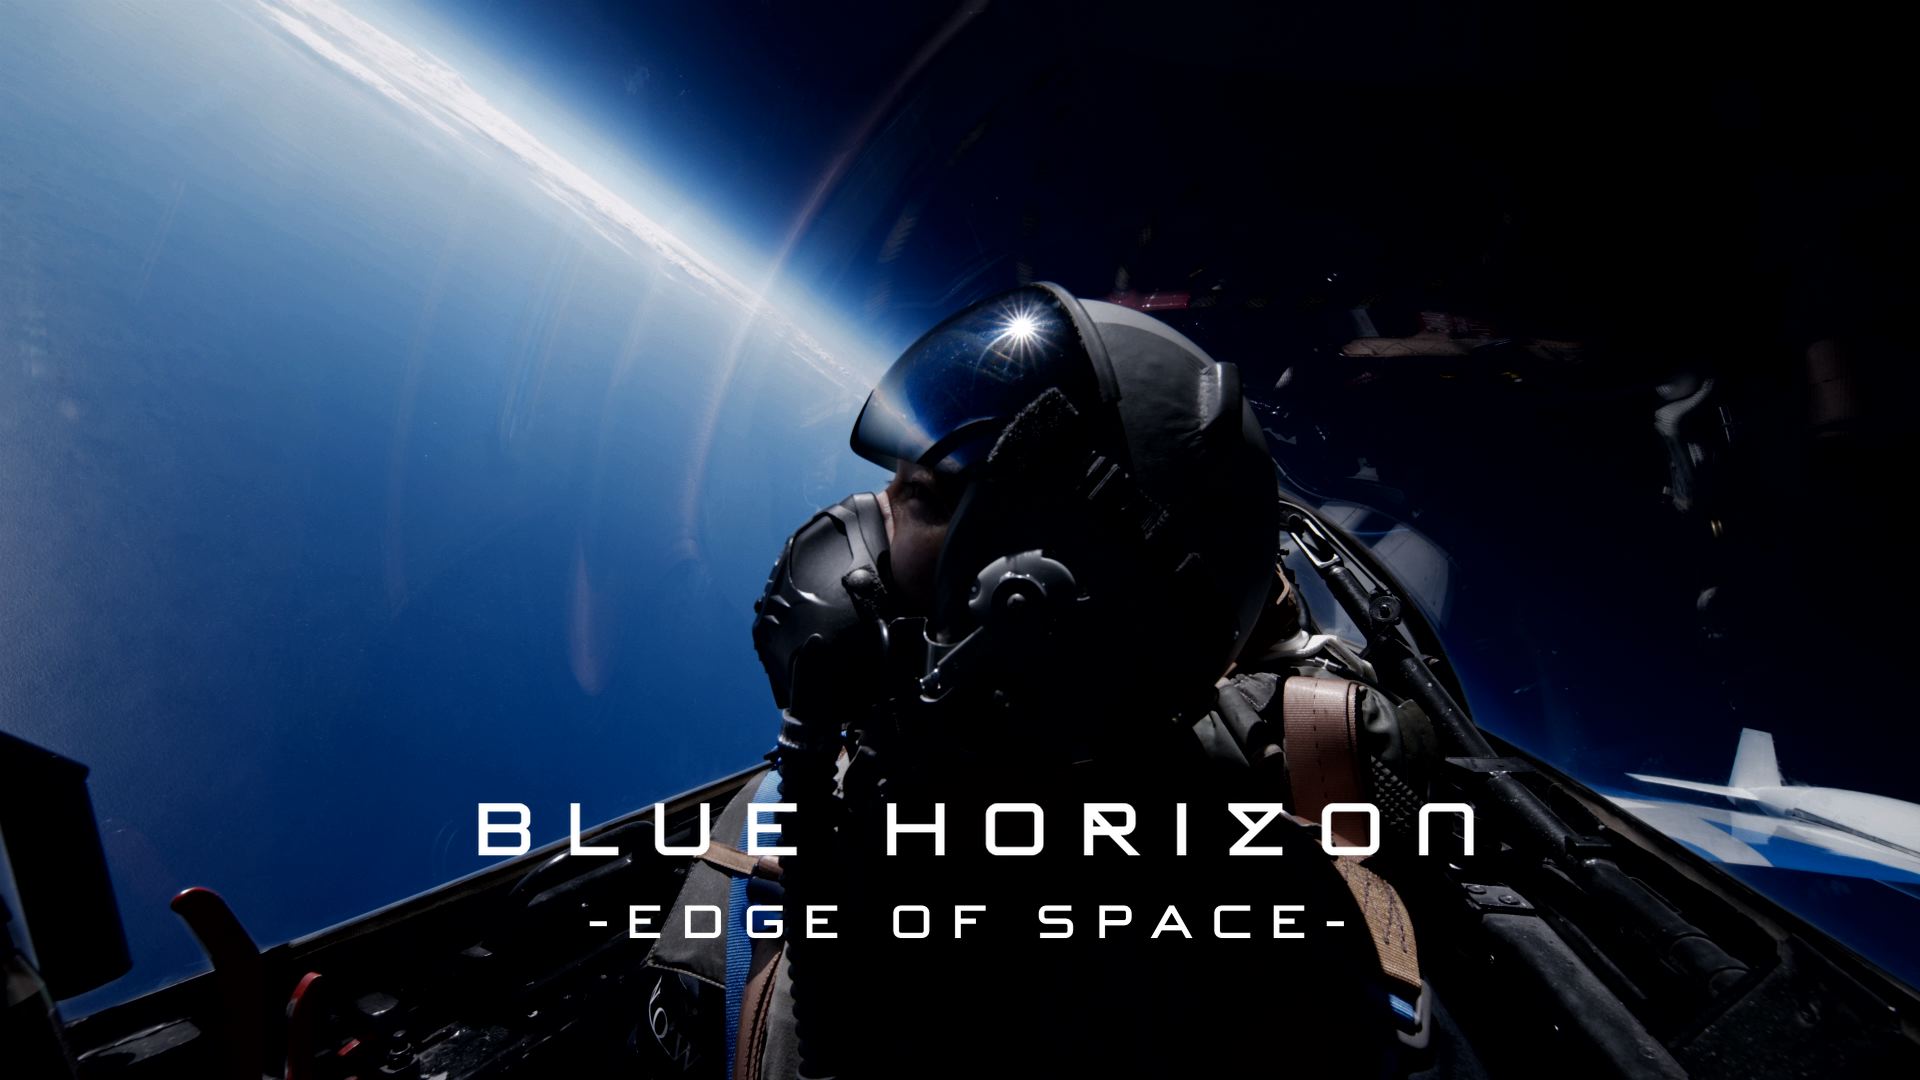 BLUE HORIZON -EDGE OF SPACE-